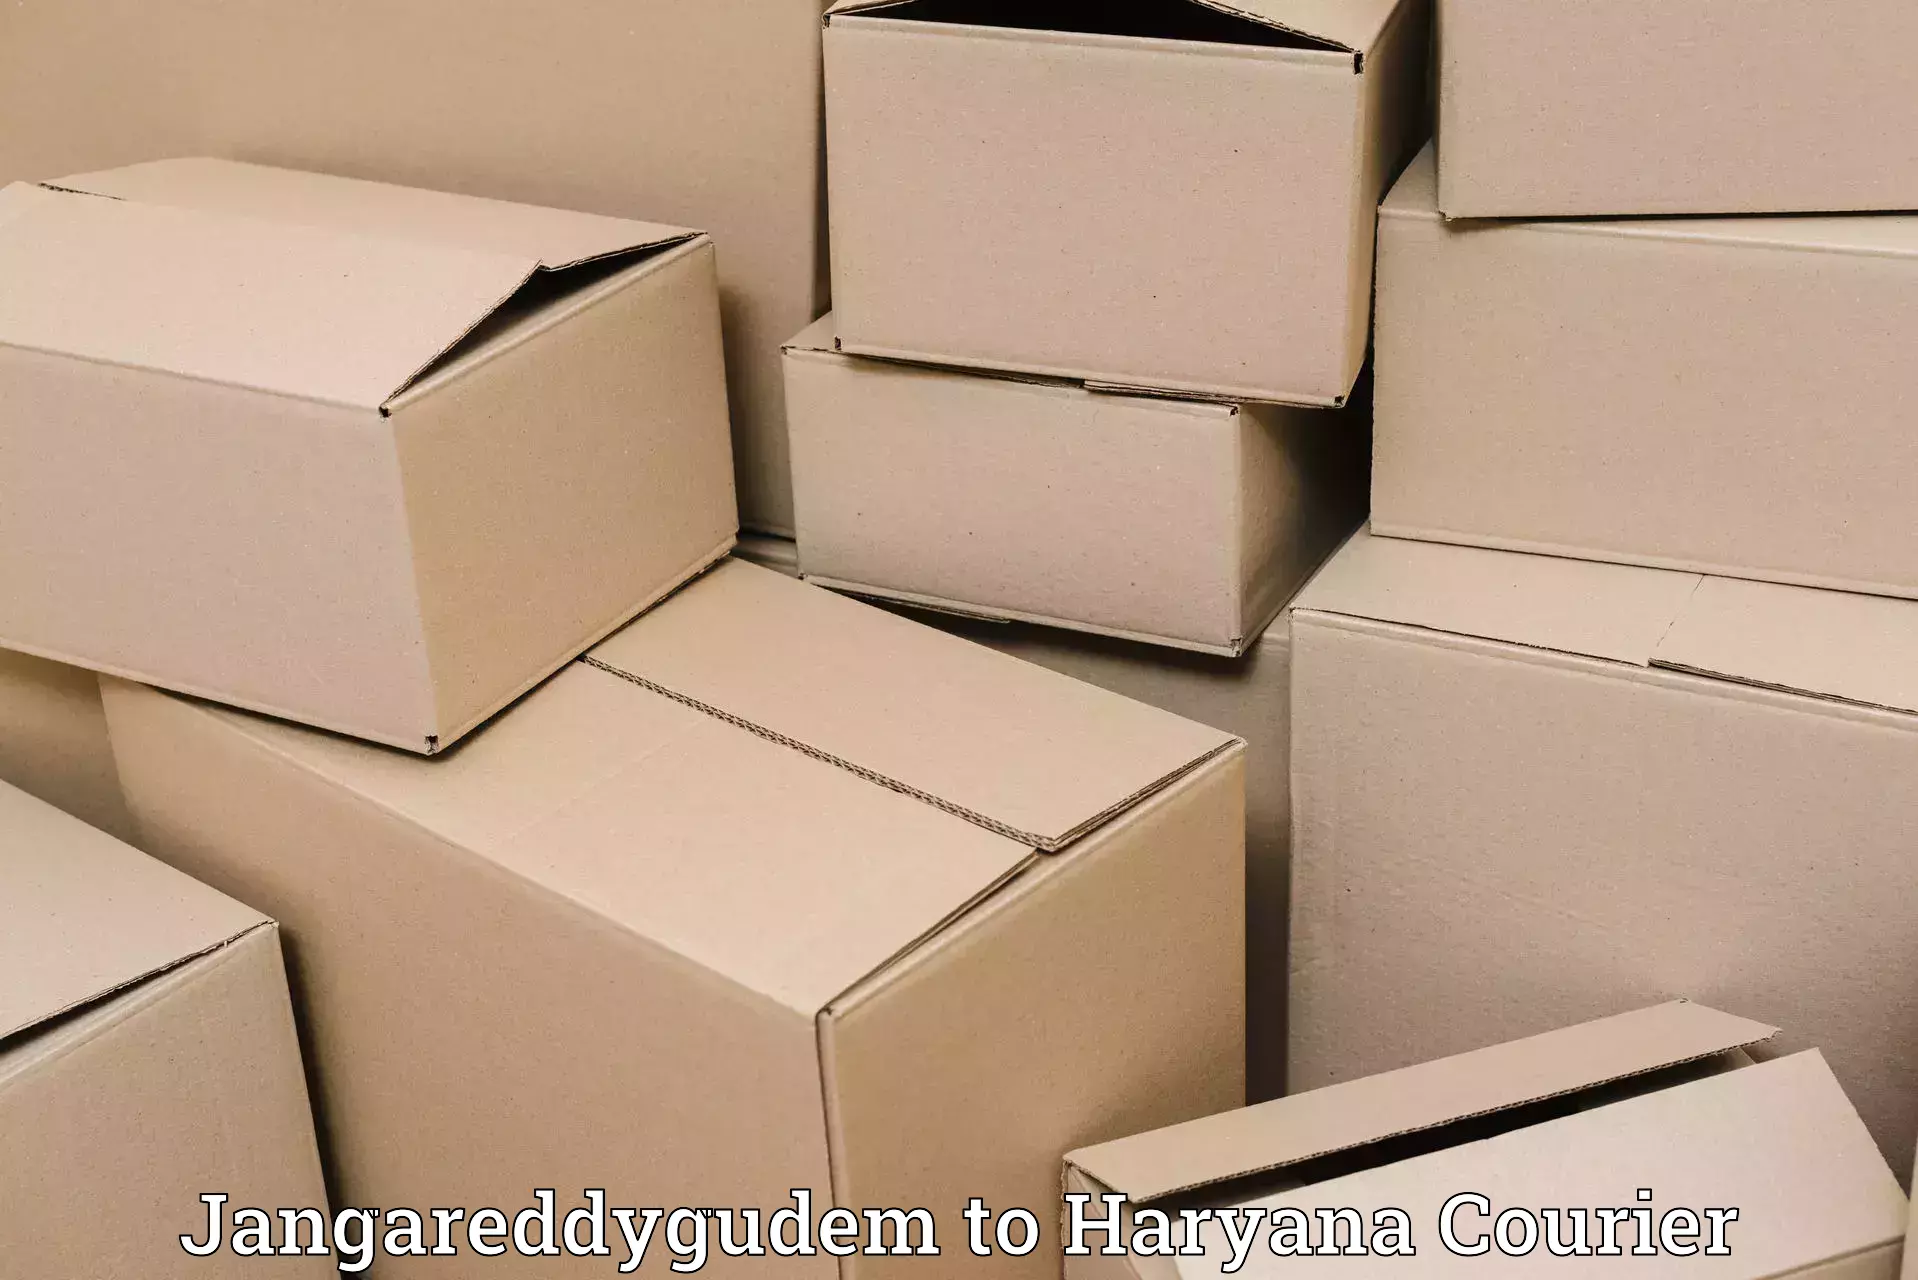 Business shipping needs Jangareddygudem to Ellenabad